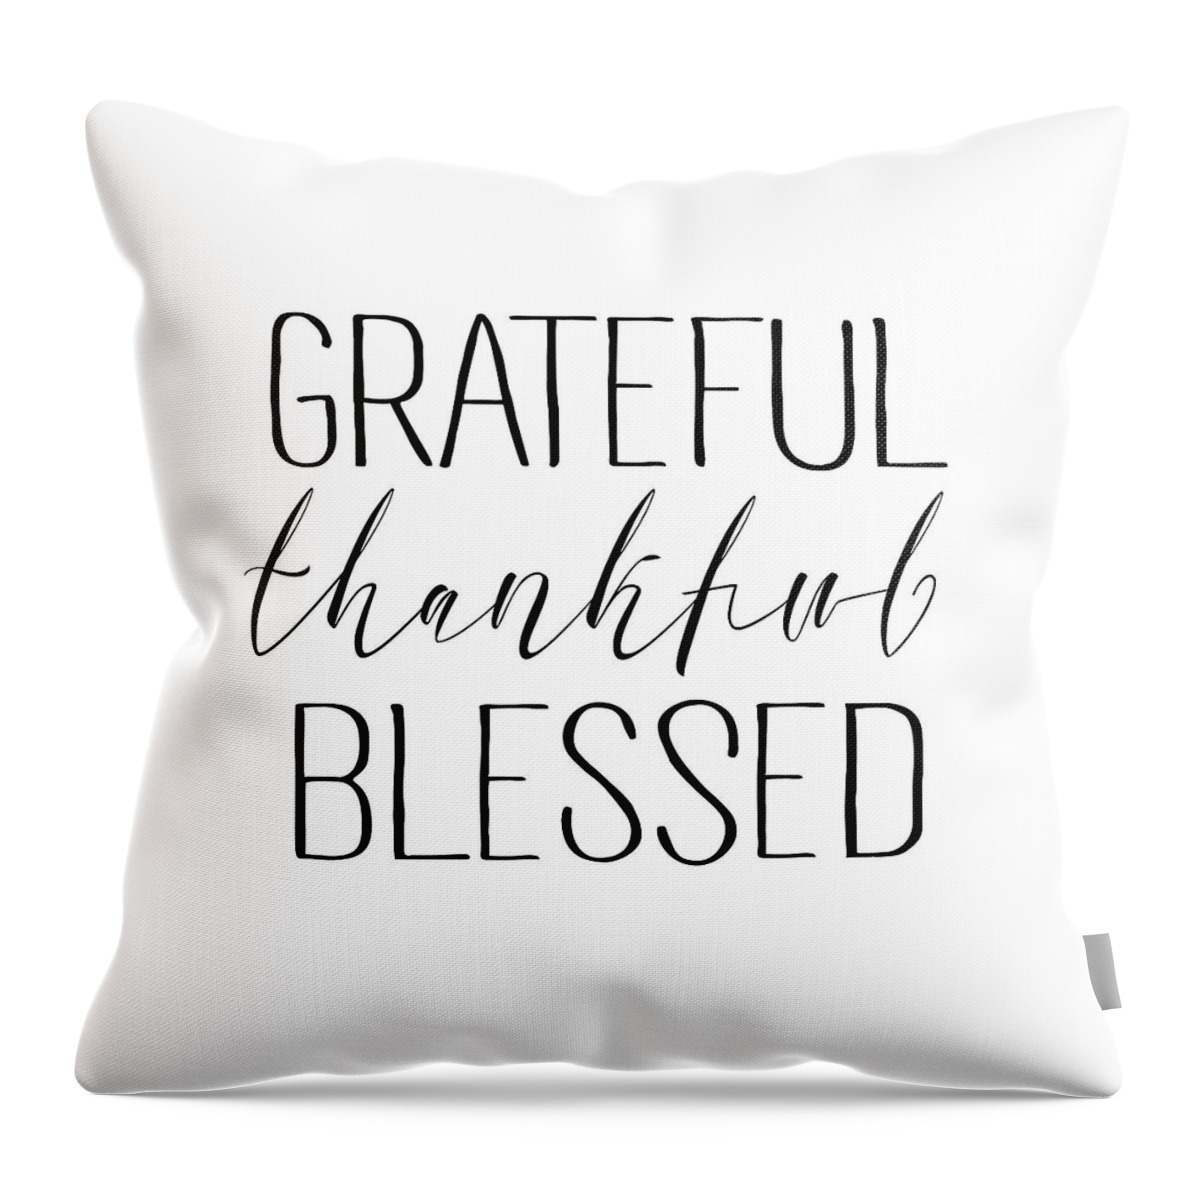 Grateful+thankful+blessed Throw Pillow featuring the digital art Grateful Thankful Blessed by Jaime Friedman